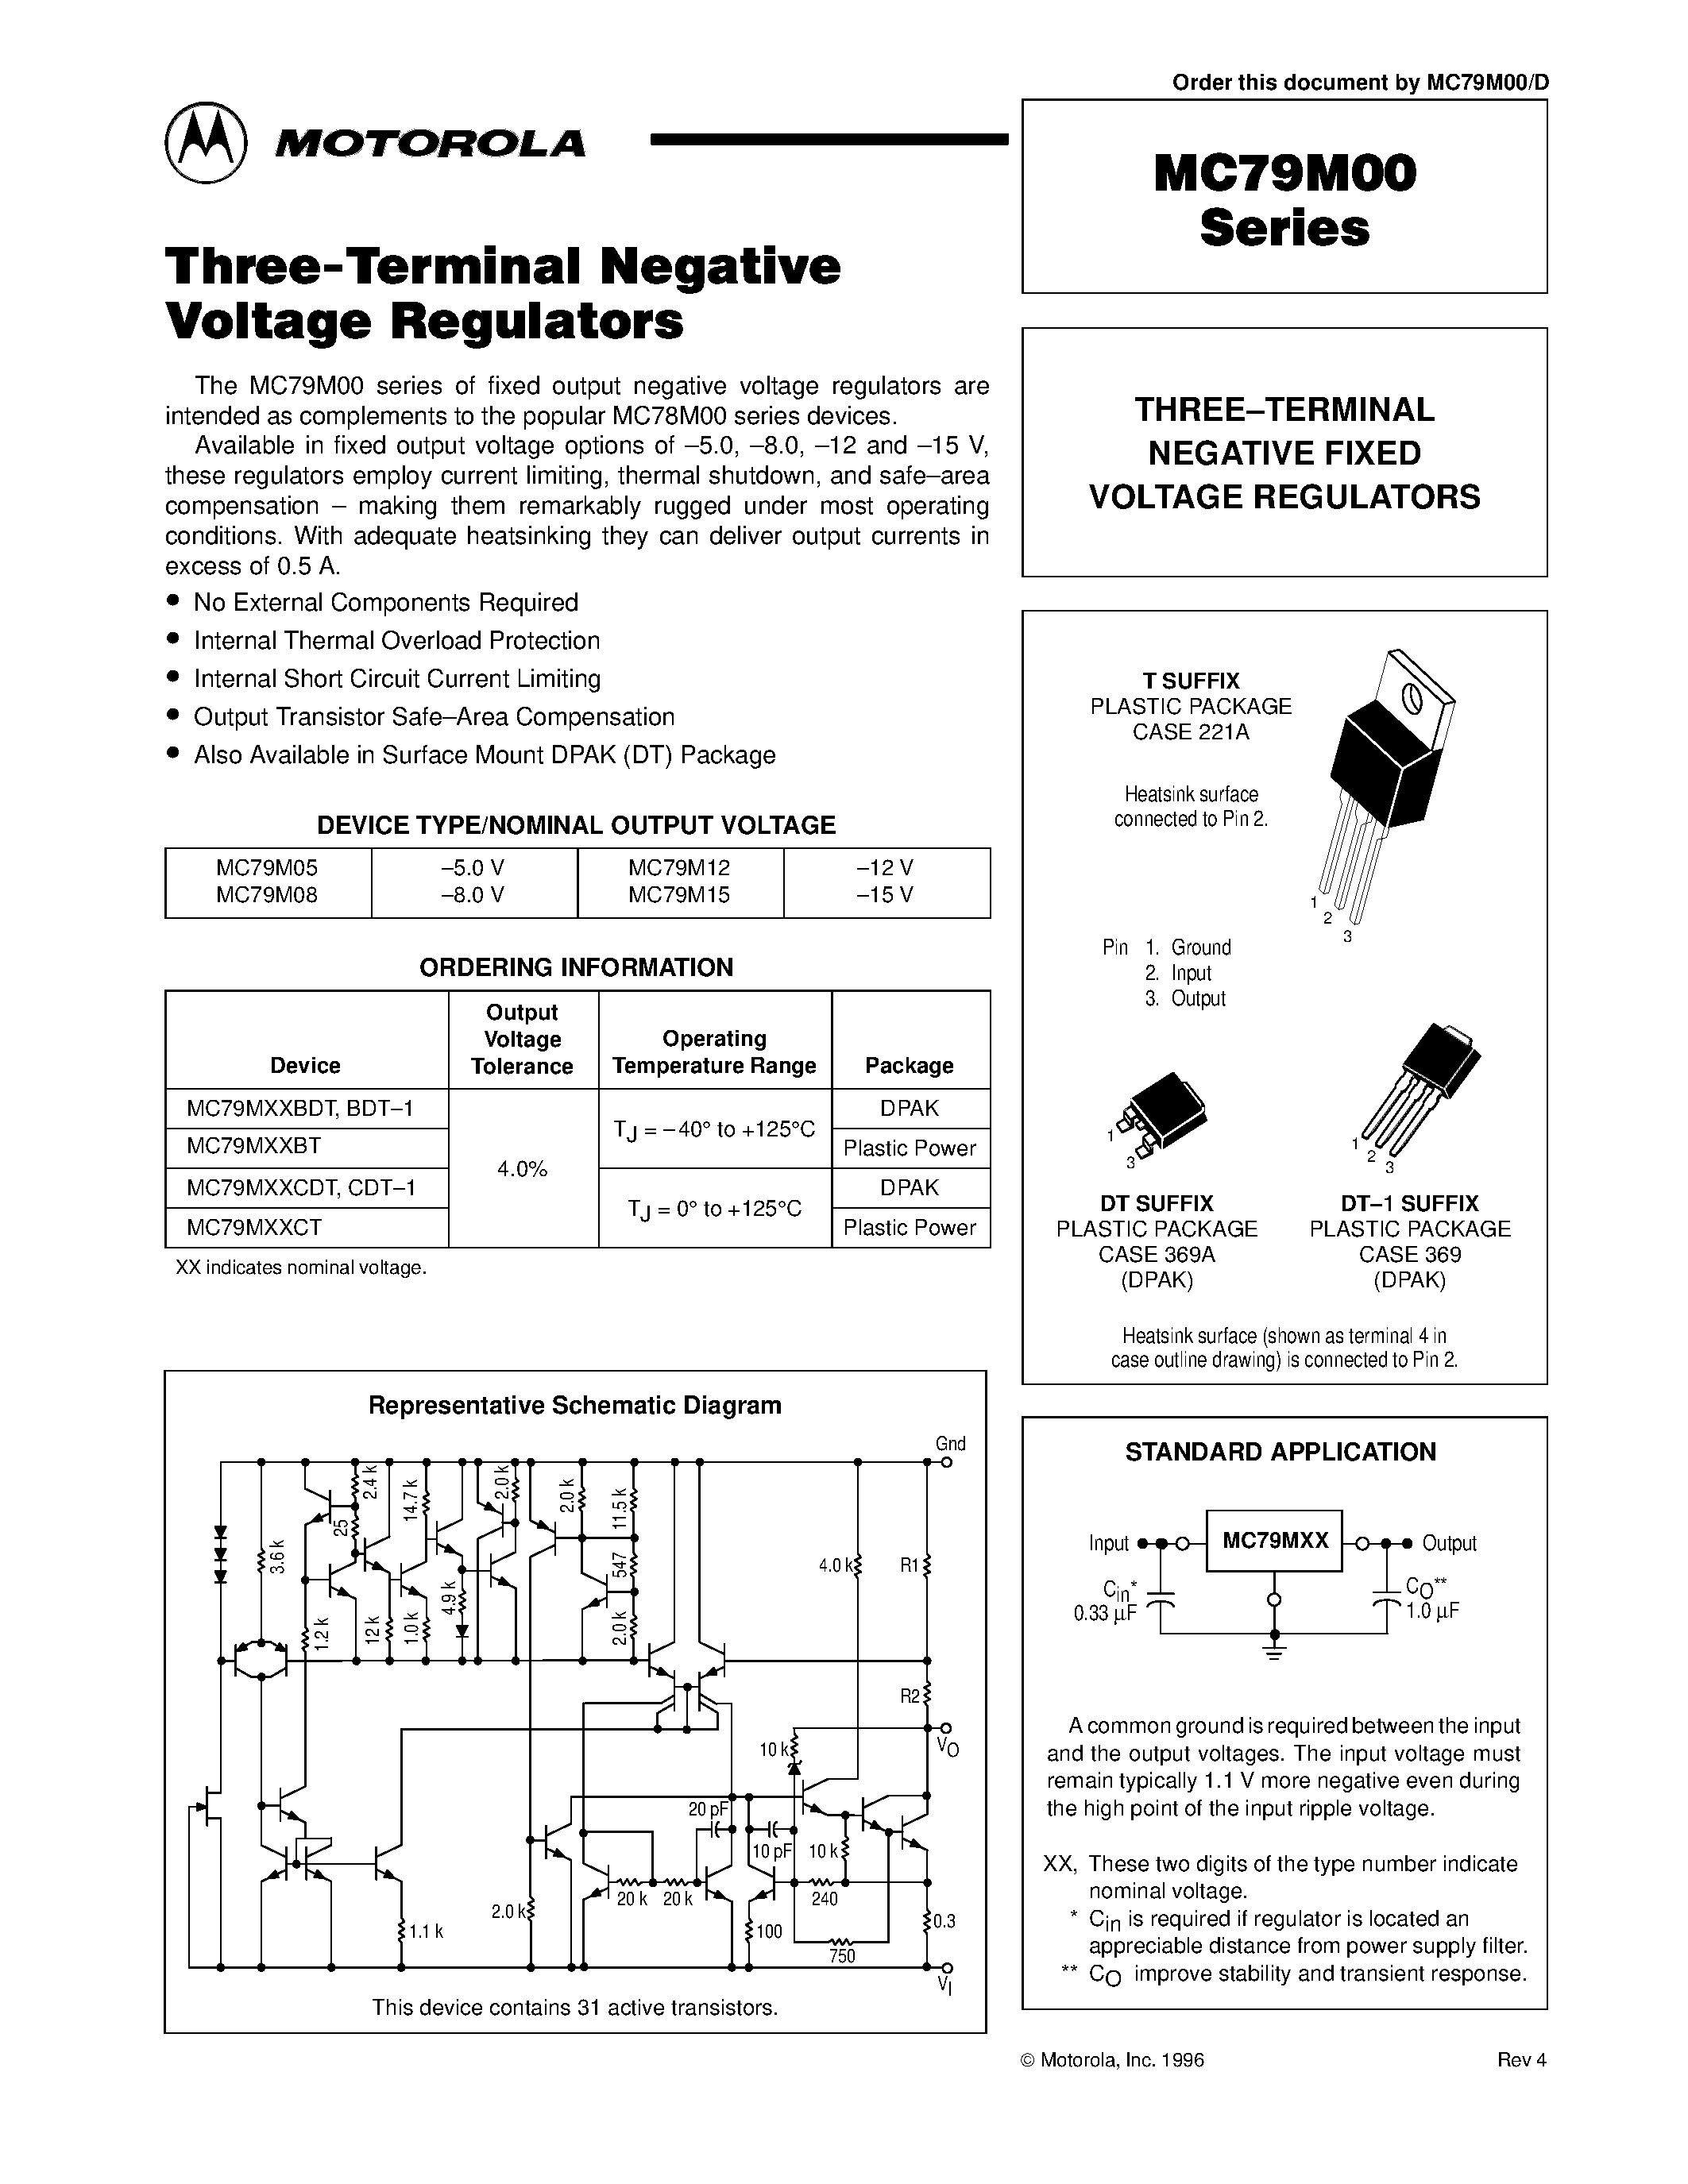 Datasheet MC79M15XBT - THREE-TERMINAL NEGATIVE FIXED VOLTAGE REGULATORS page 1